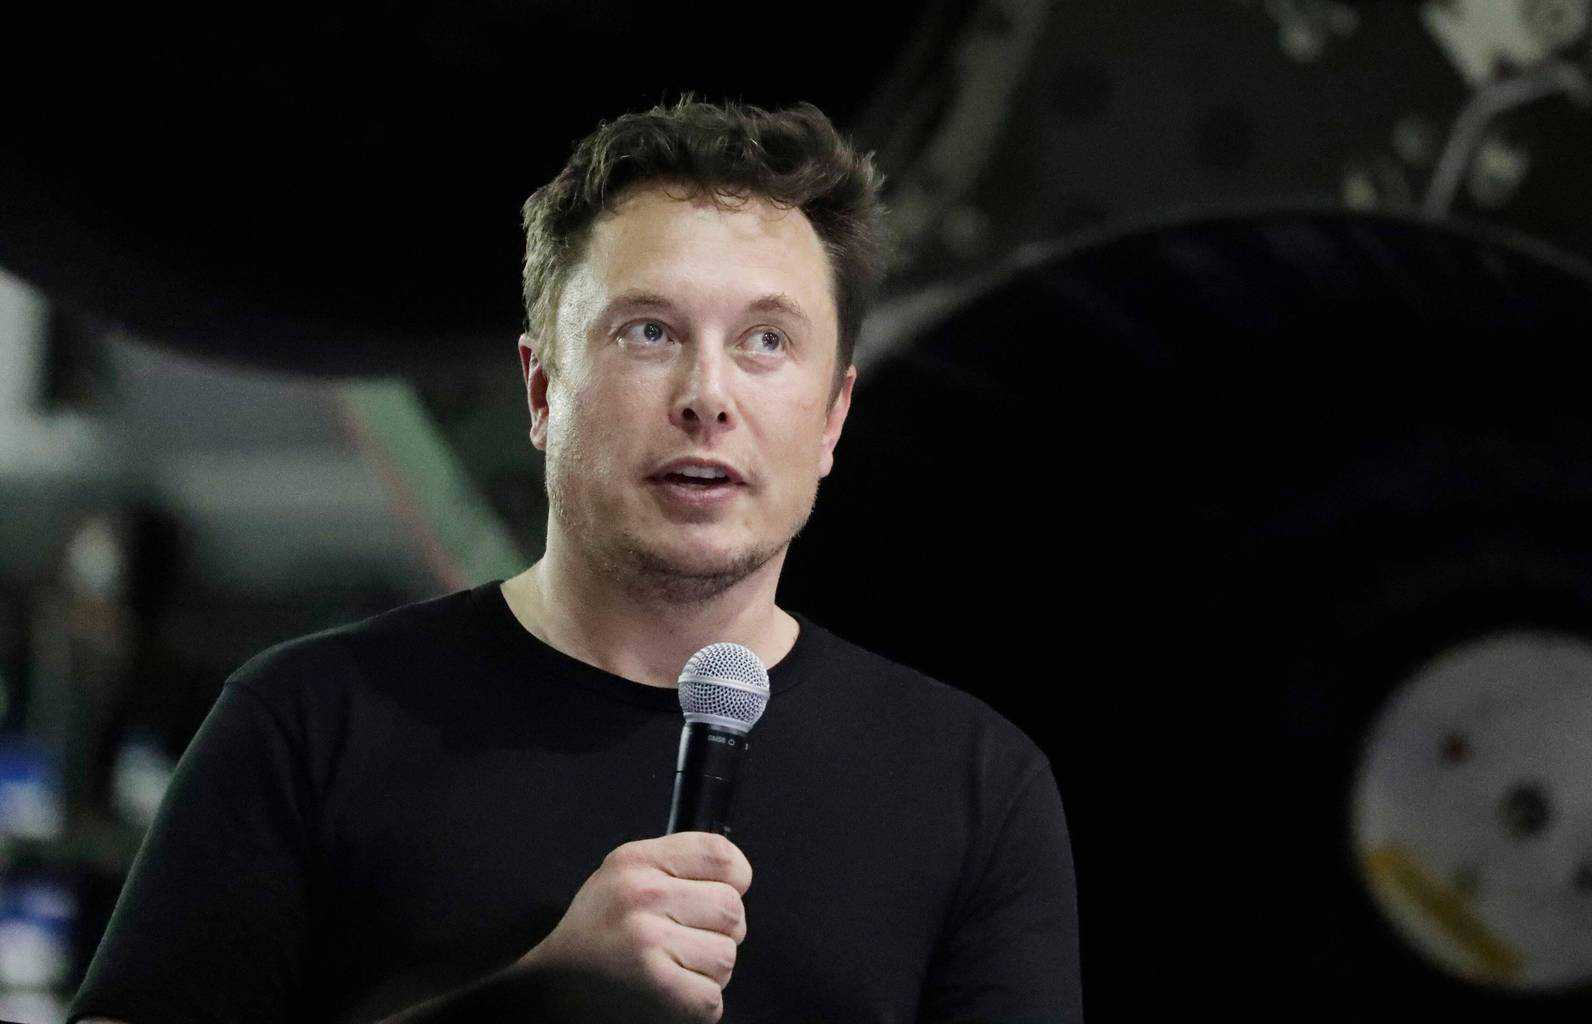 Elon Musk showcasing Tesla's solar tiles